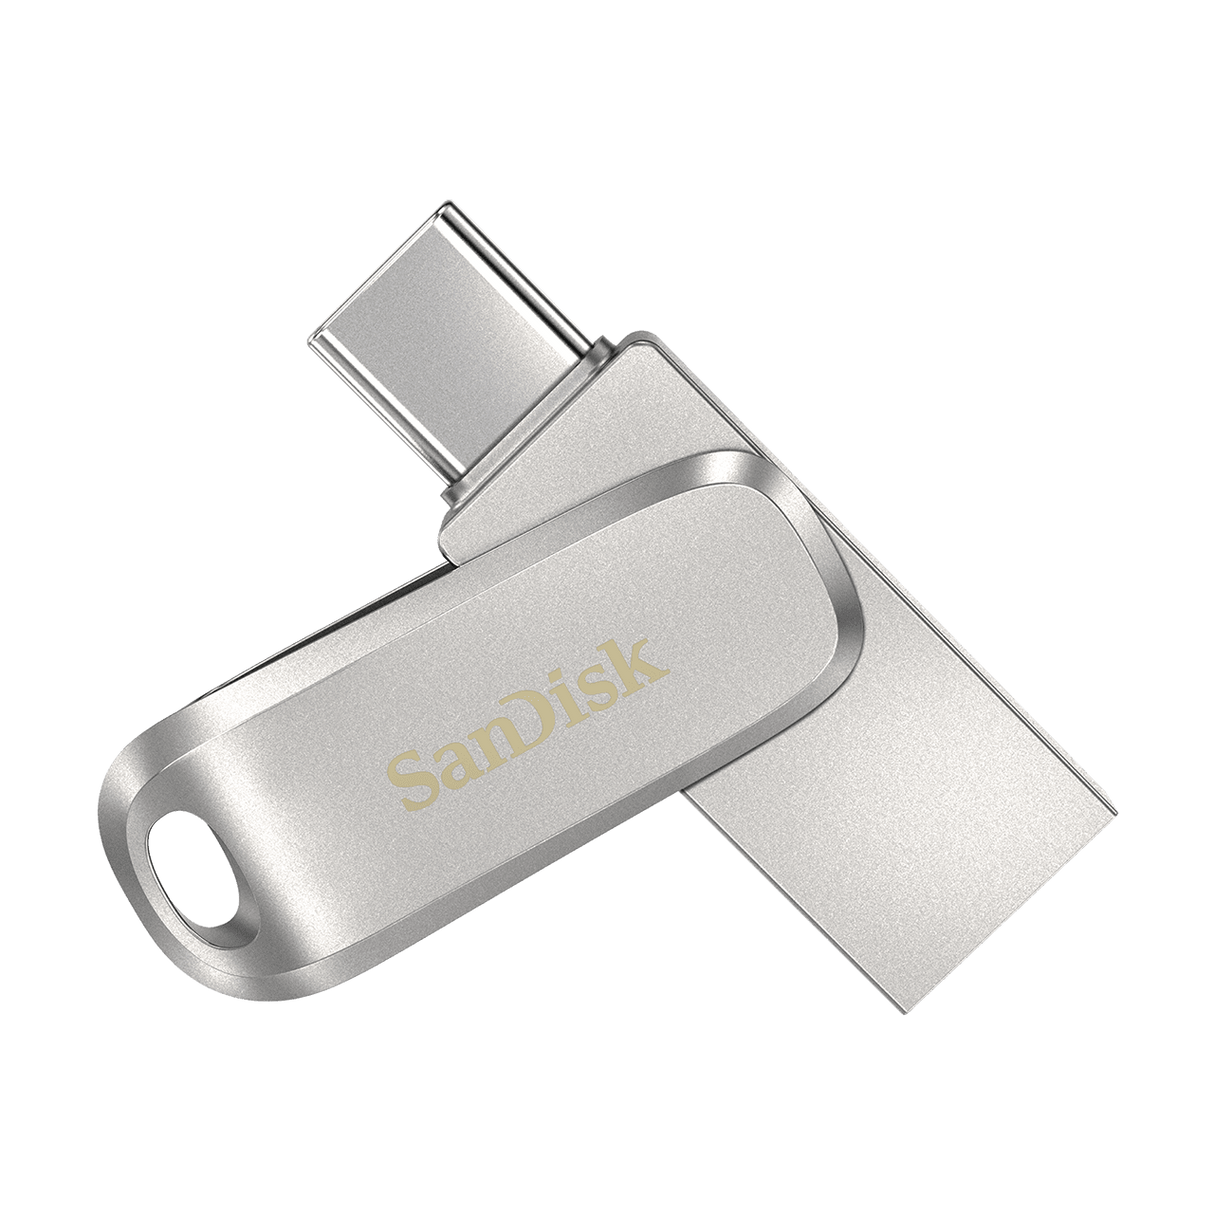 SanDisk Ultra Dual Drive Luxe USB Type-C 64GB 150MB/s USB 3.1 Gen 1, srebrn